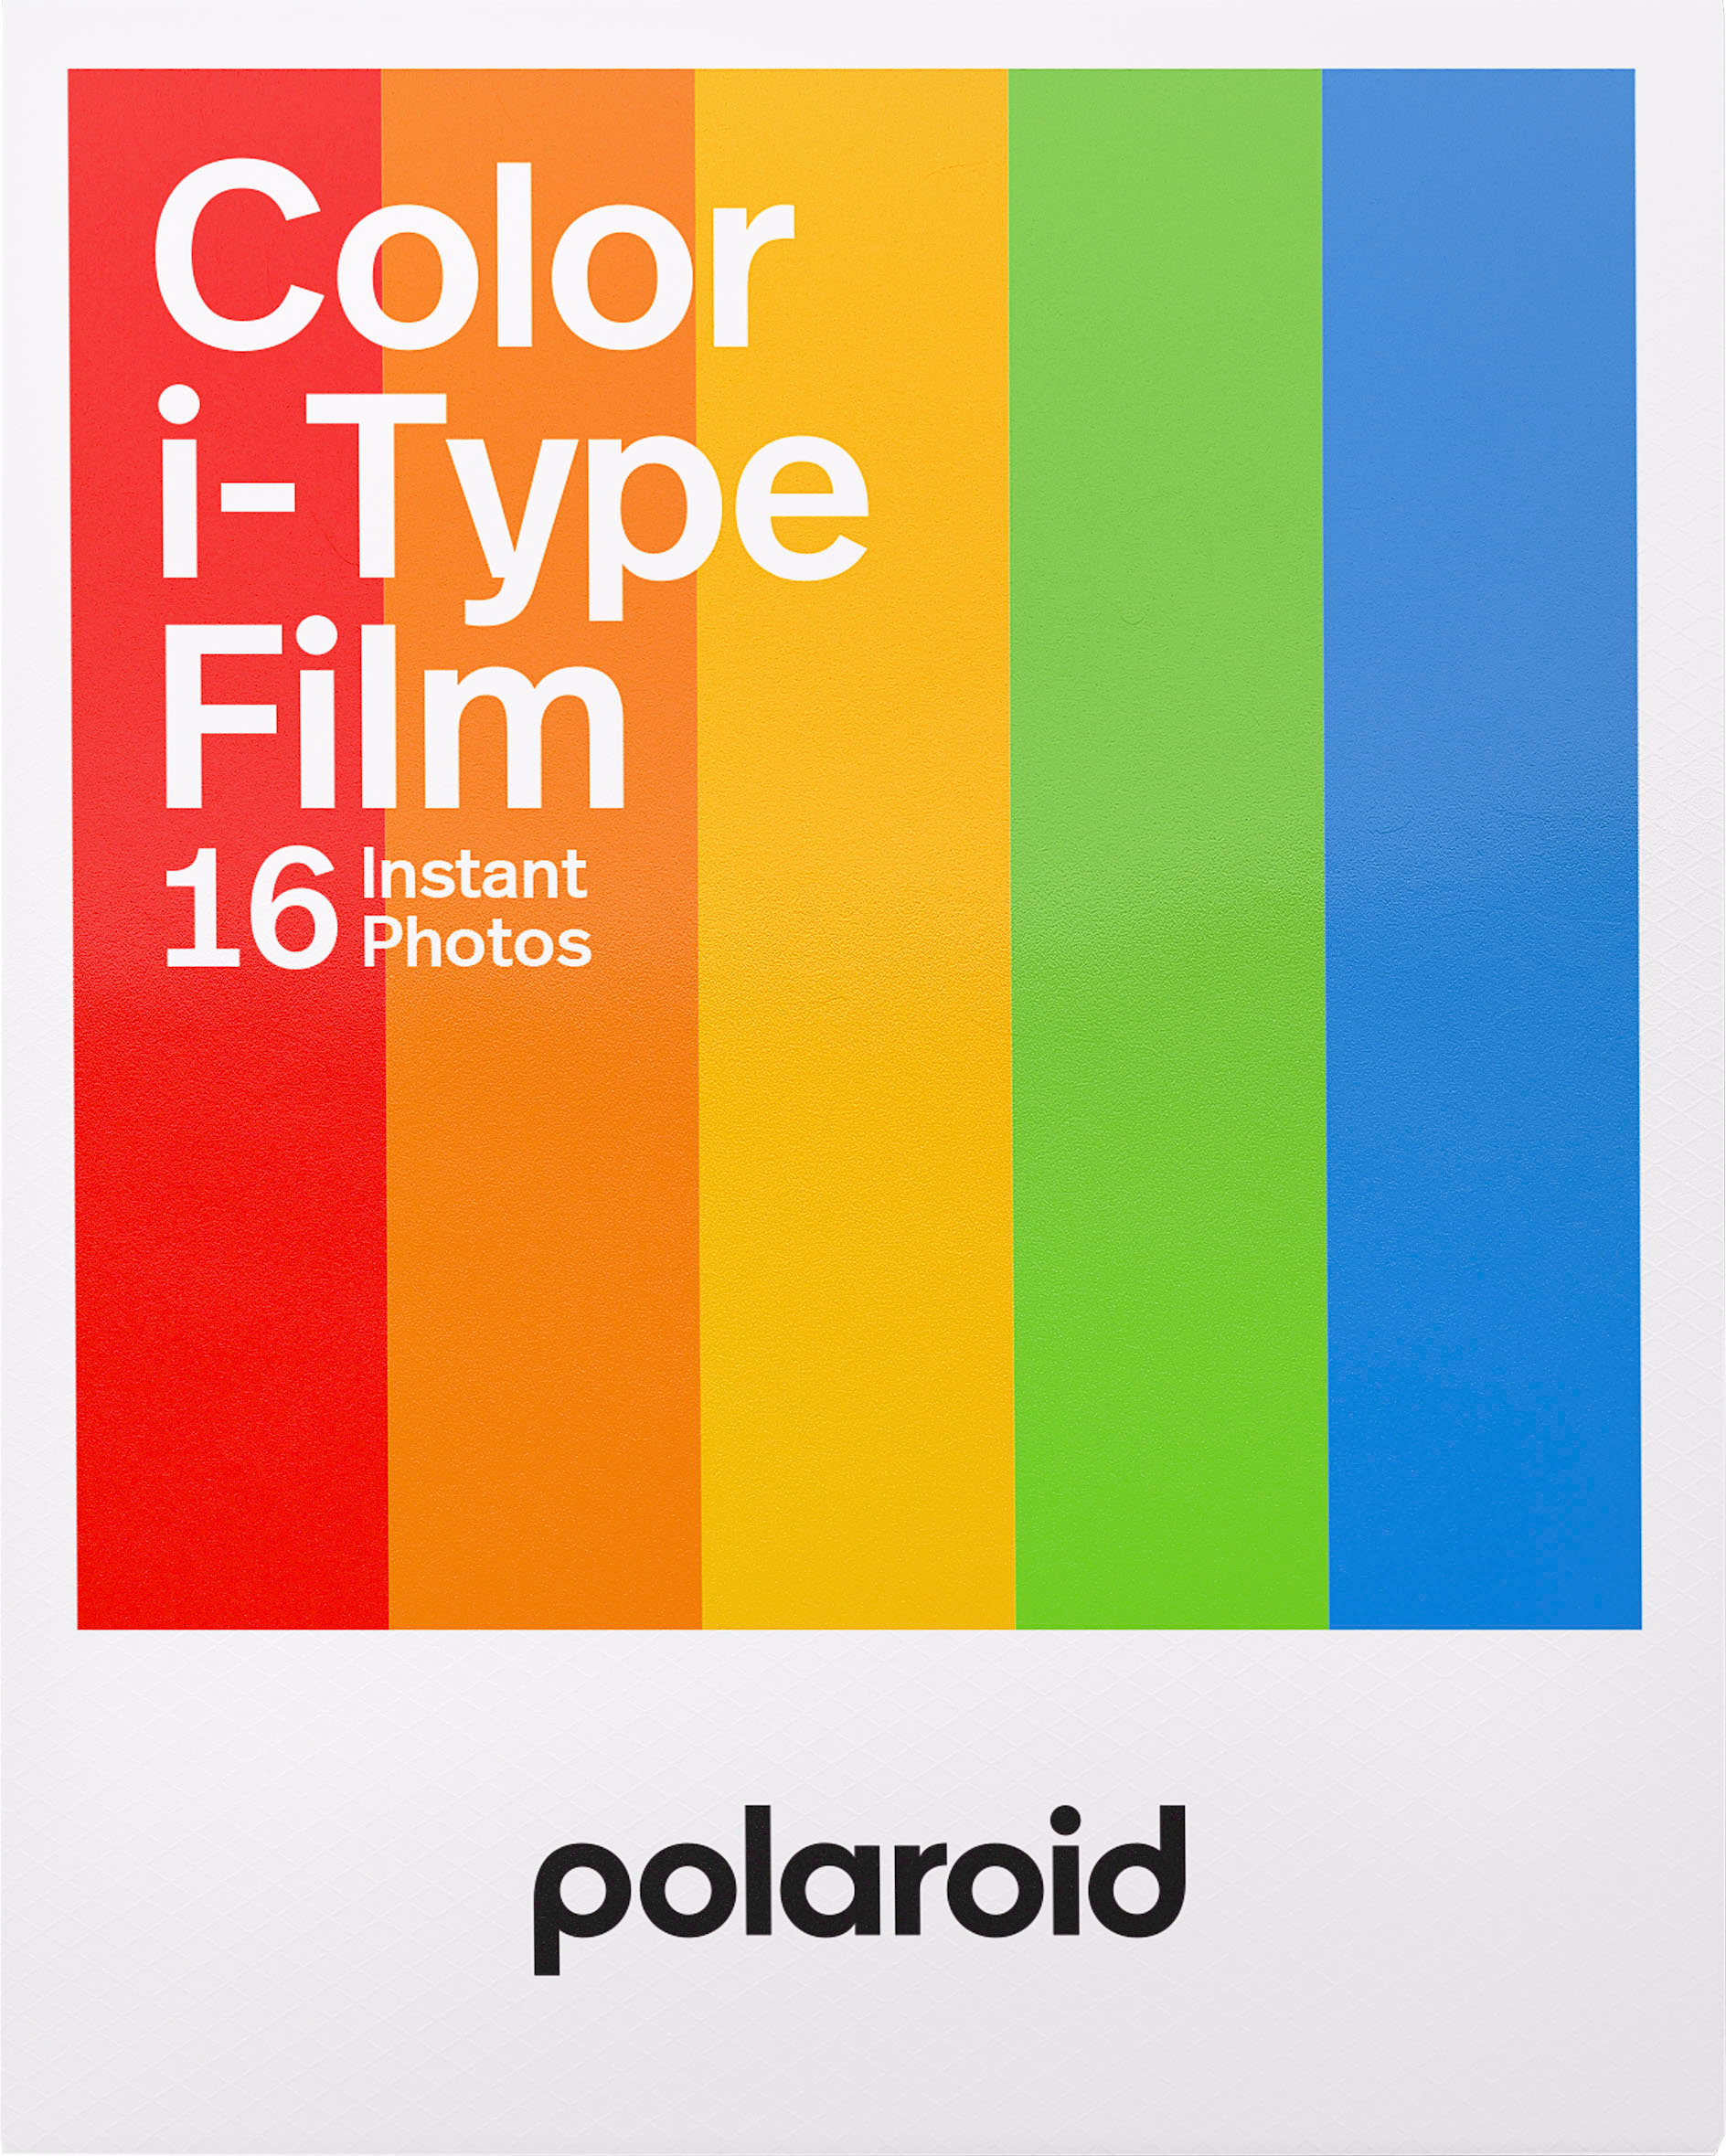 Polaroid NOW+ Instant Film Camera with Color Film, B&W Film and Storage Box  